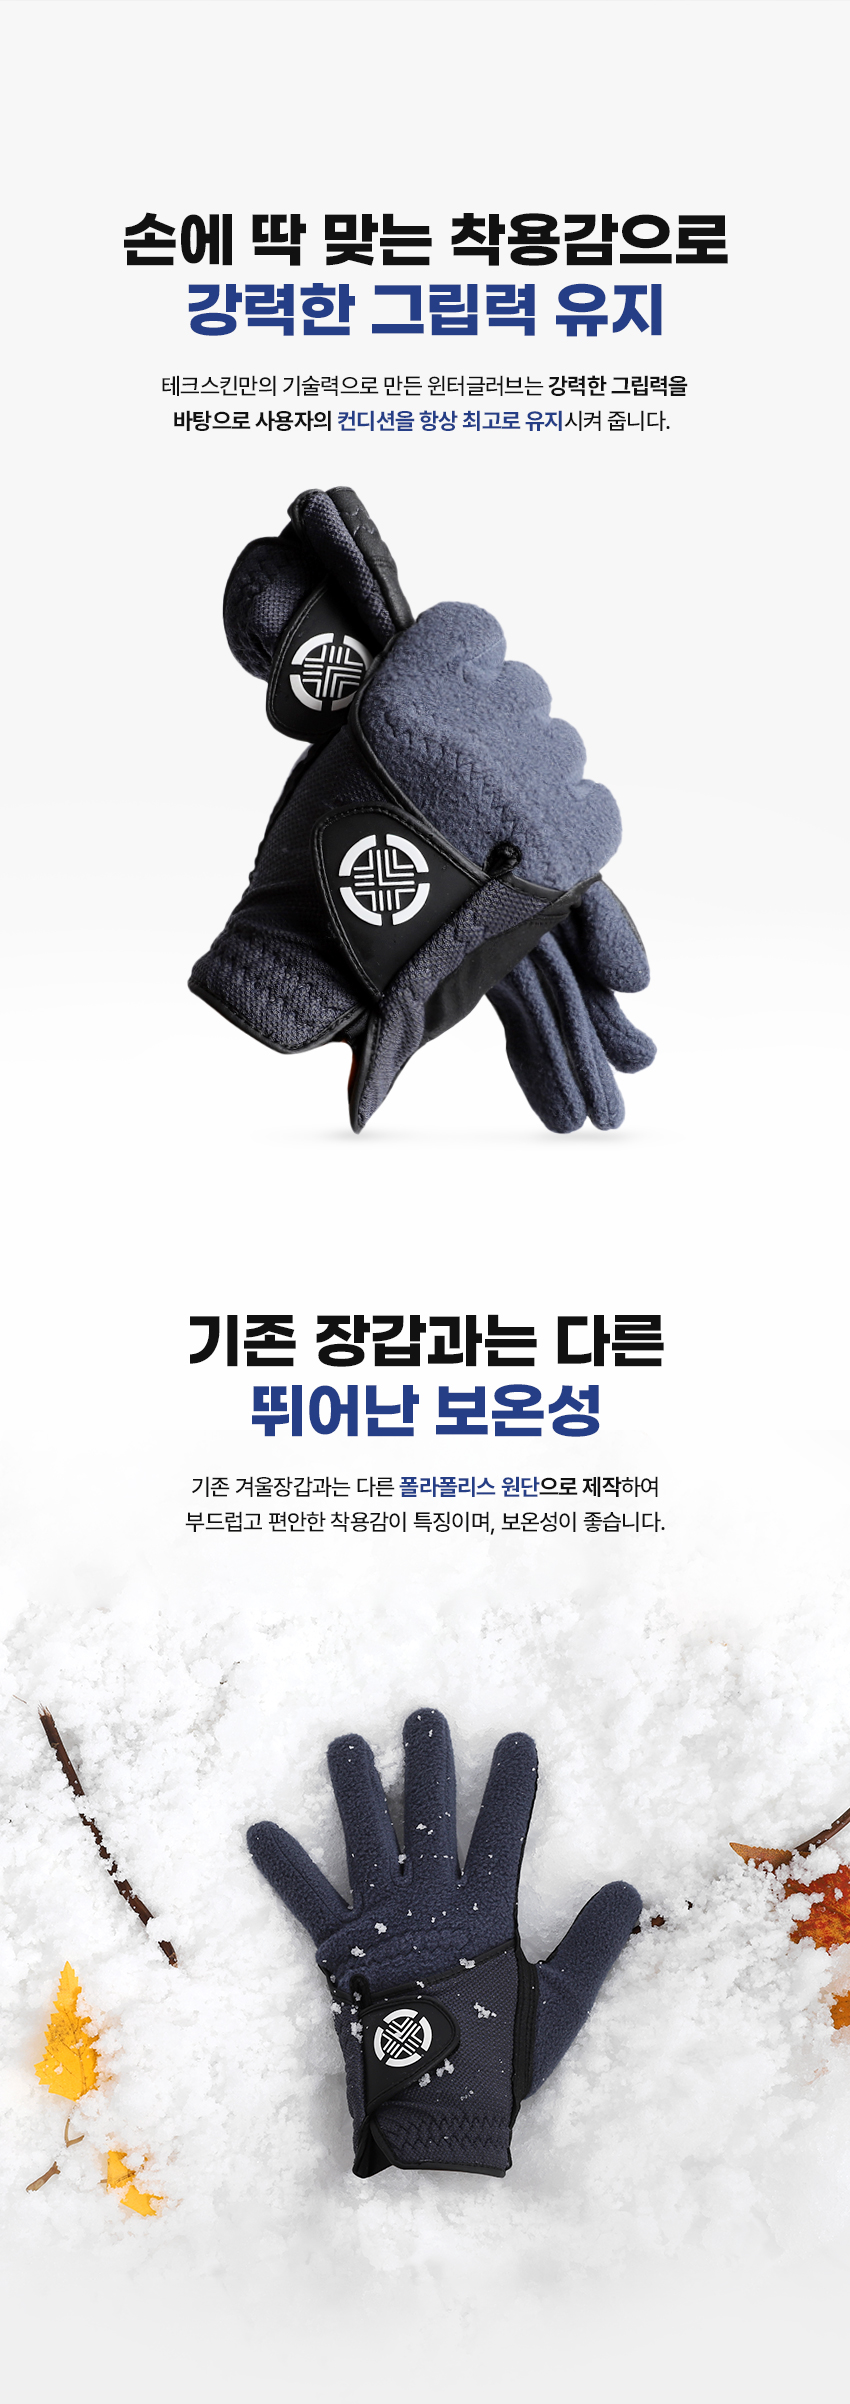 winter_glove08.jpg